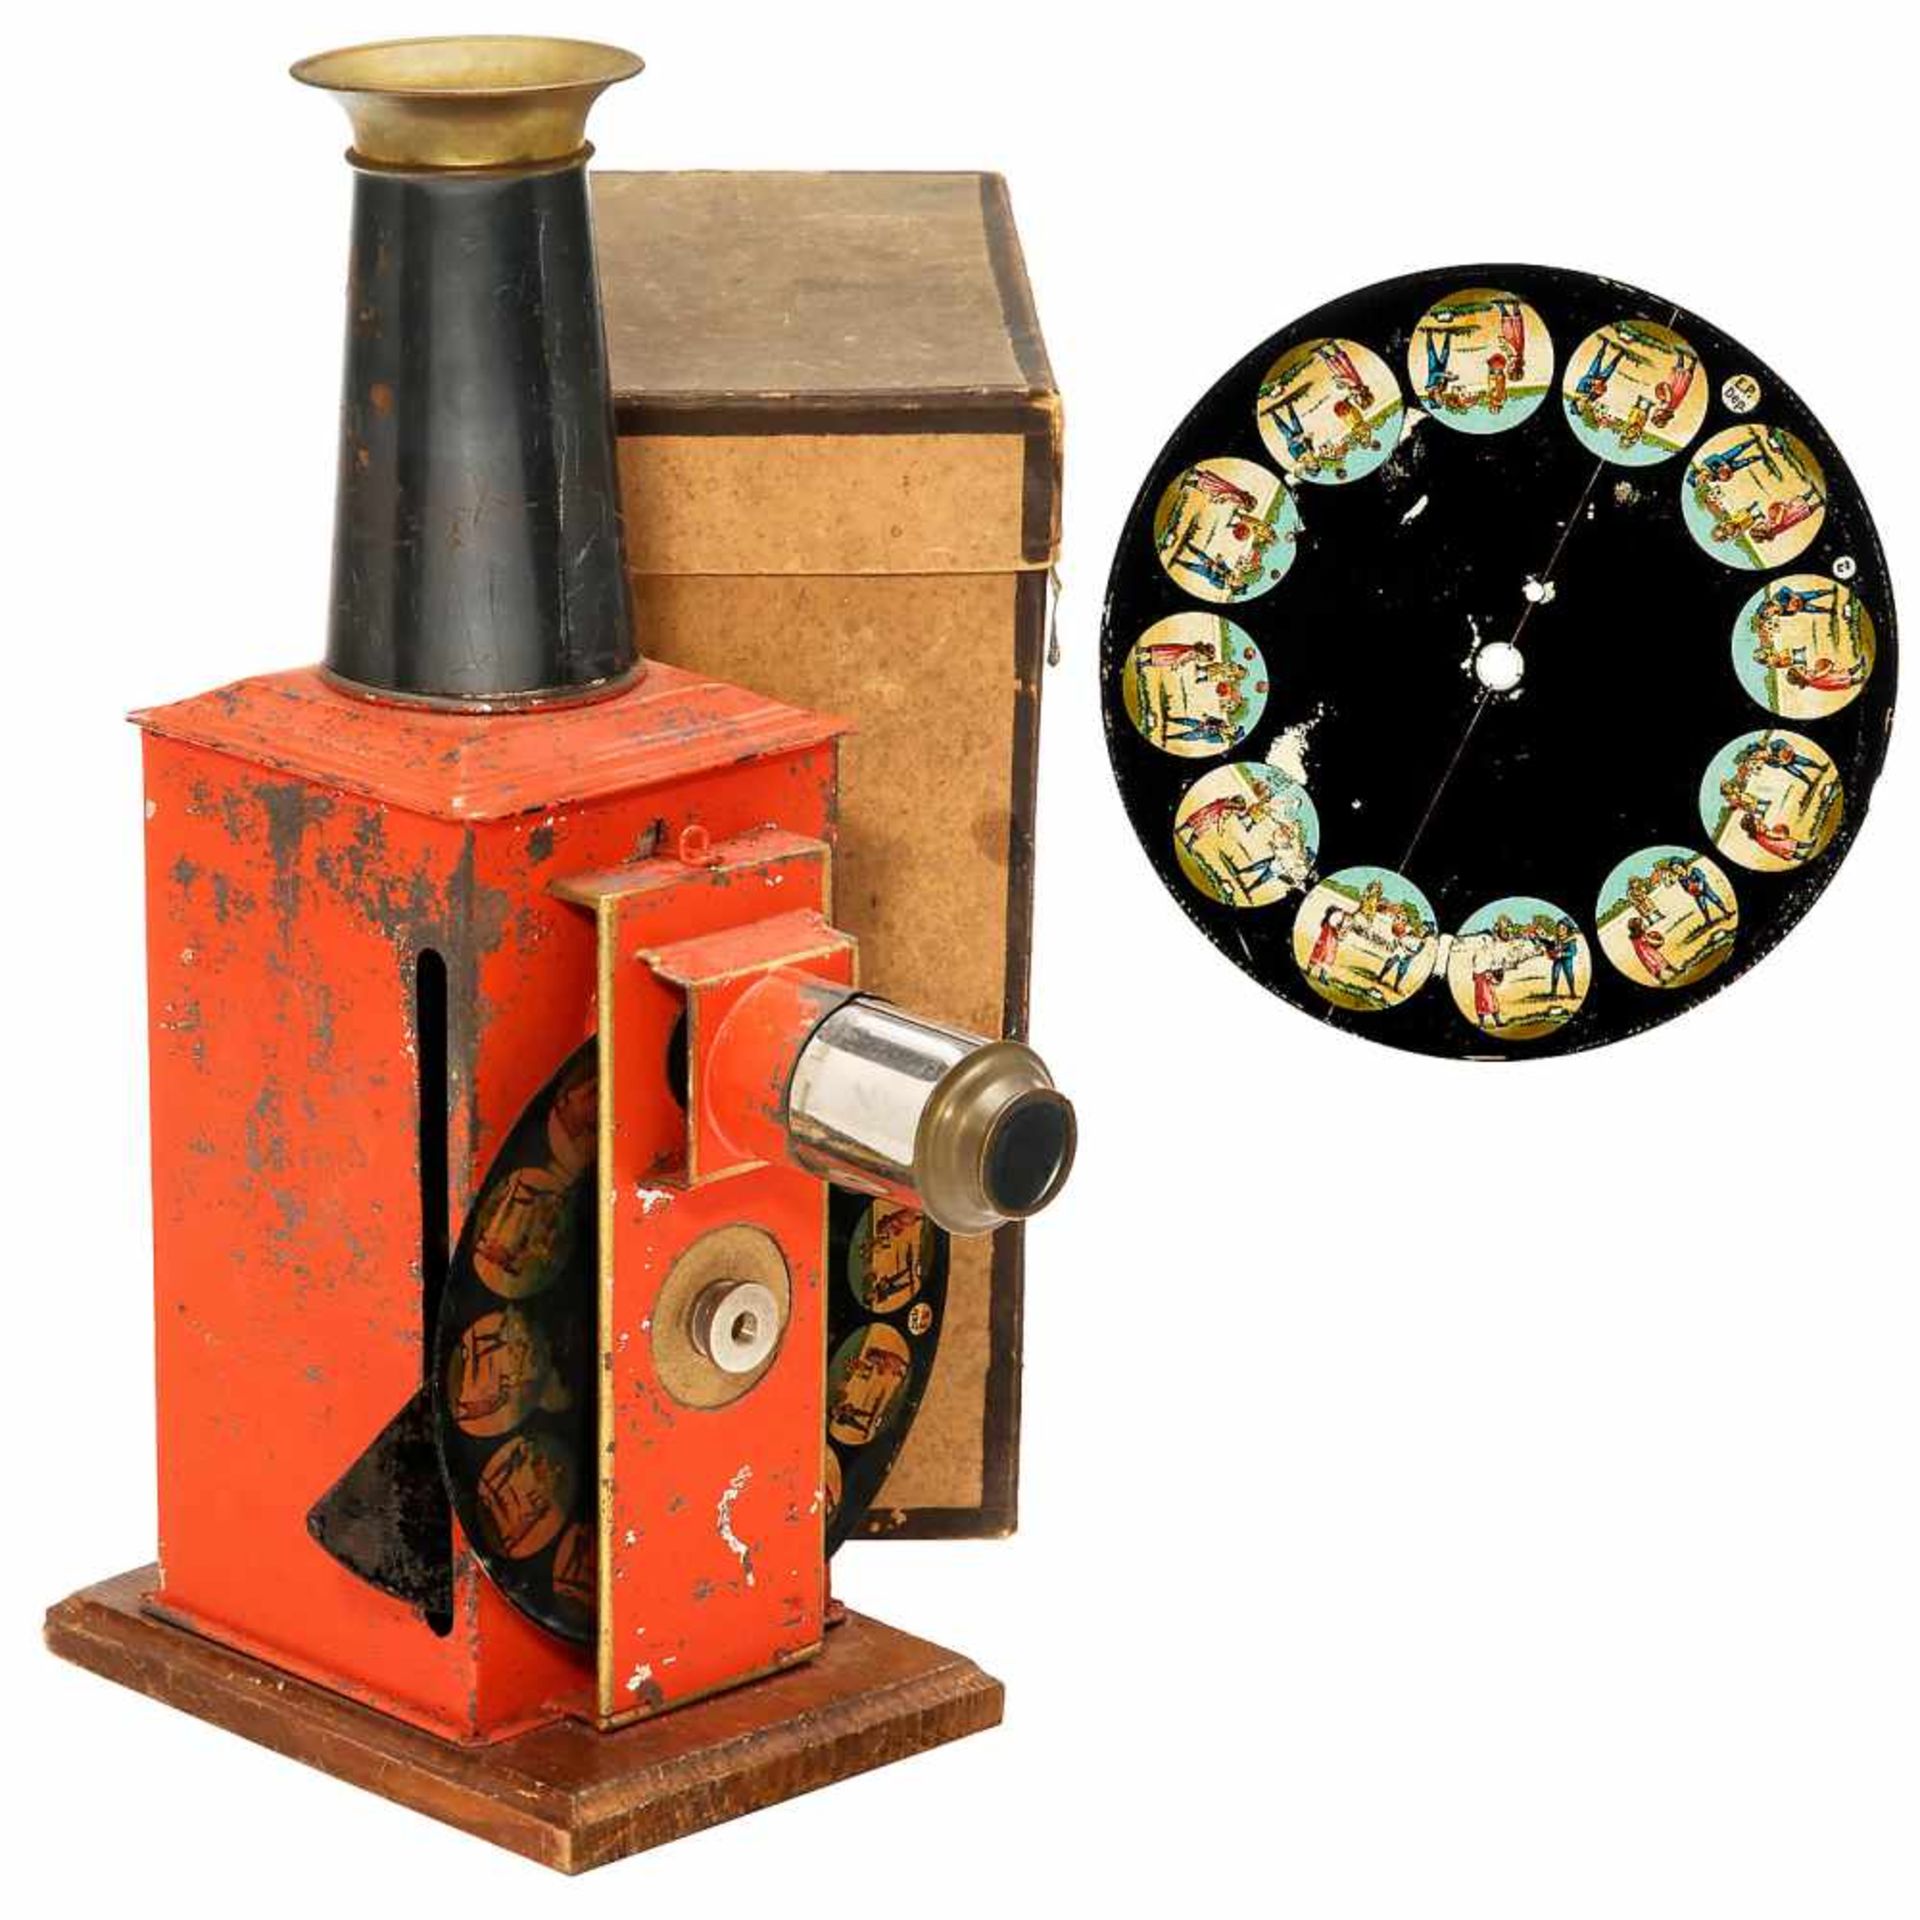 Kinematador No. 788, c. 1900Ernst Plank, Nuremberg. Magic lantern with crank drive and 1 round